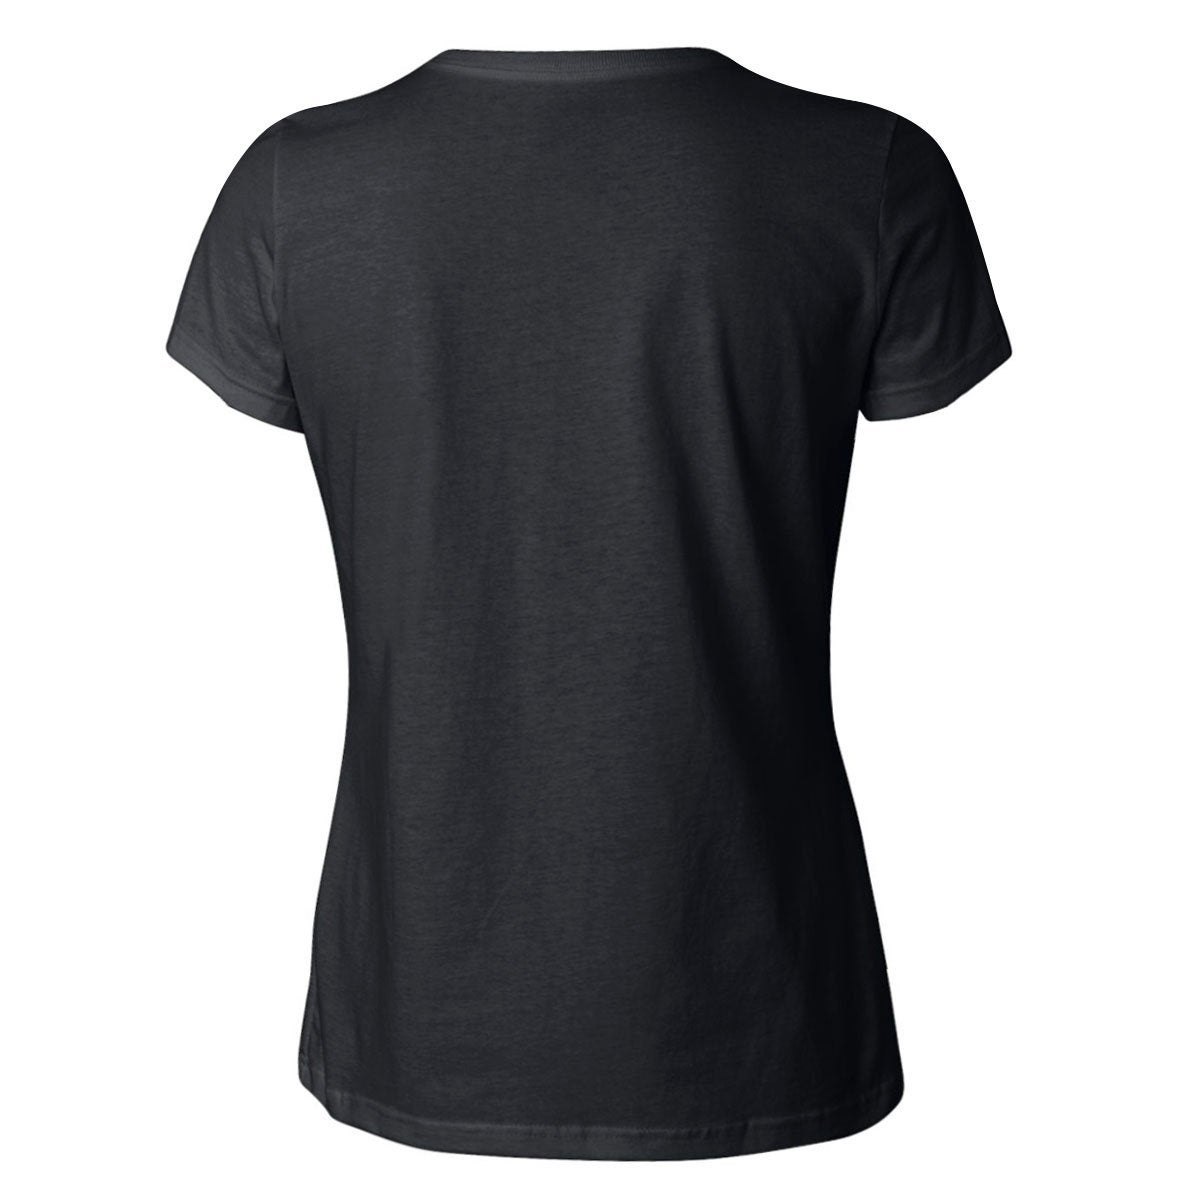 Women's Black Shirt by pinsandbones.com